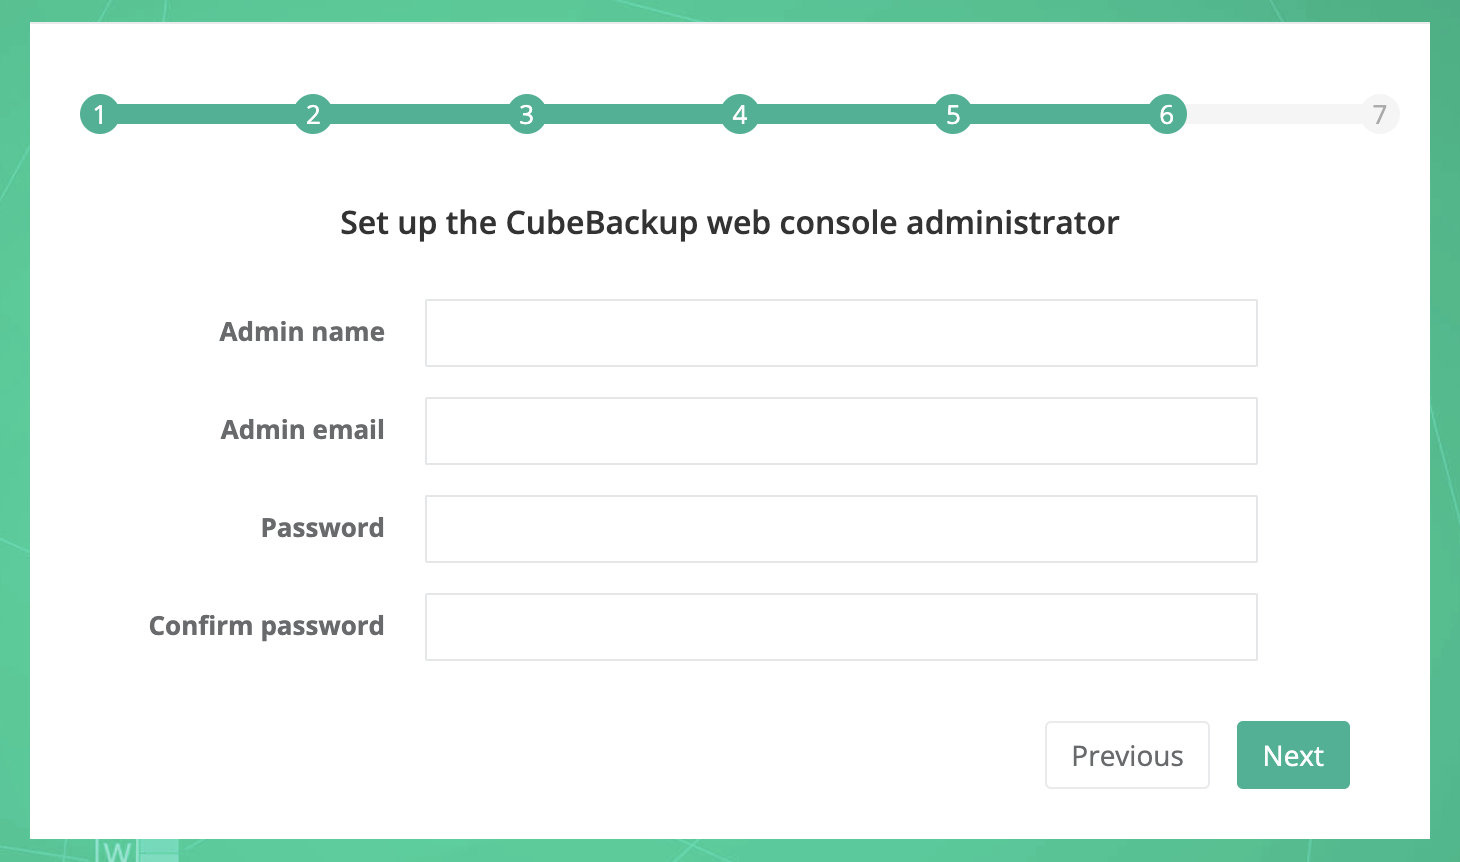 Step 6. Set up the CubeBackup web console administrator